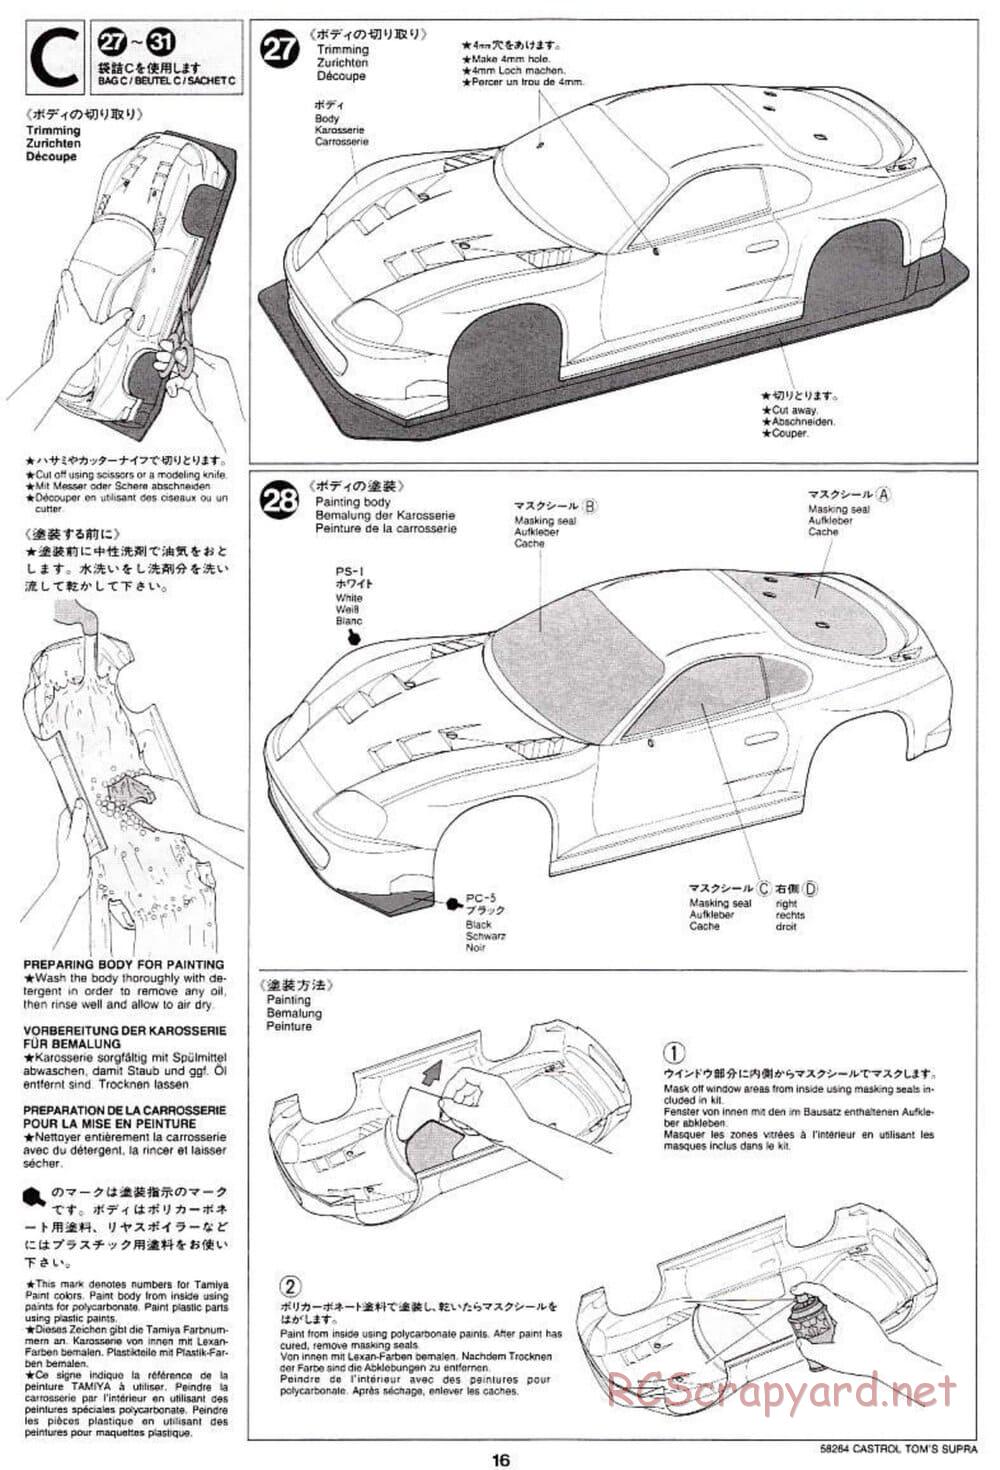 Tamiya - Castrol Tom's Supra 2000 - TL-01 Chassis - Manual - Page 16